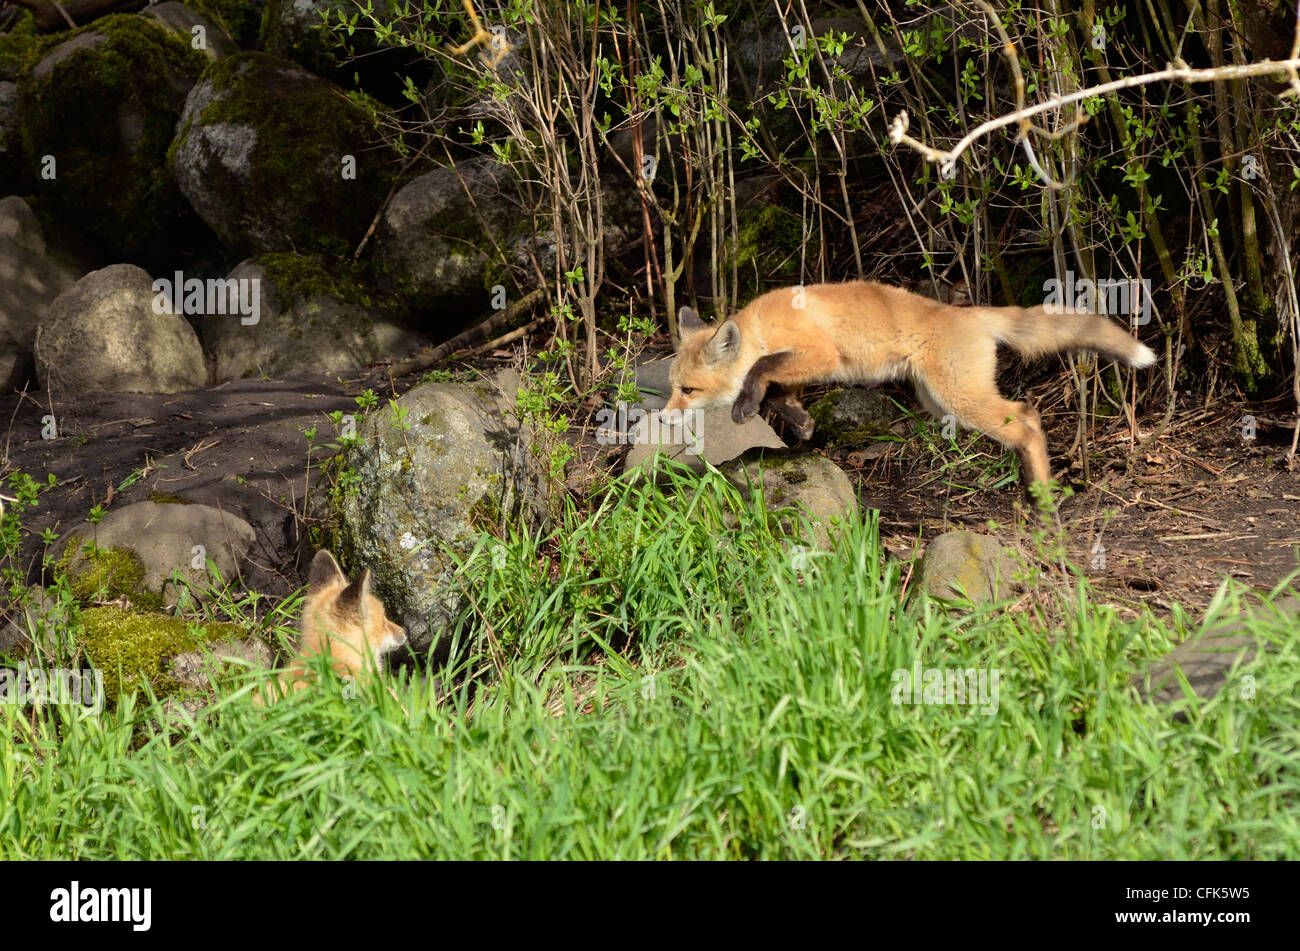 Fox kits at play, Wallowa Valley, Oregon. Stock Photo